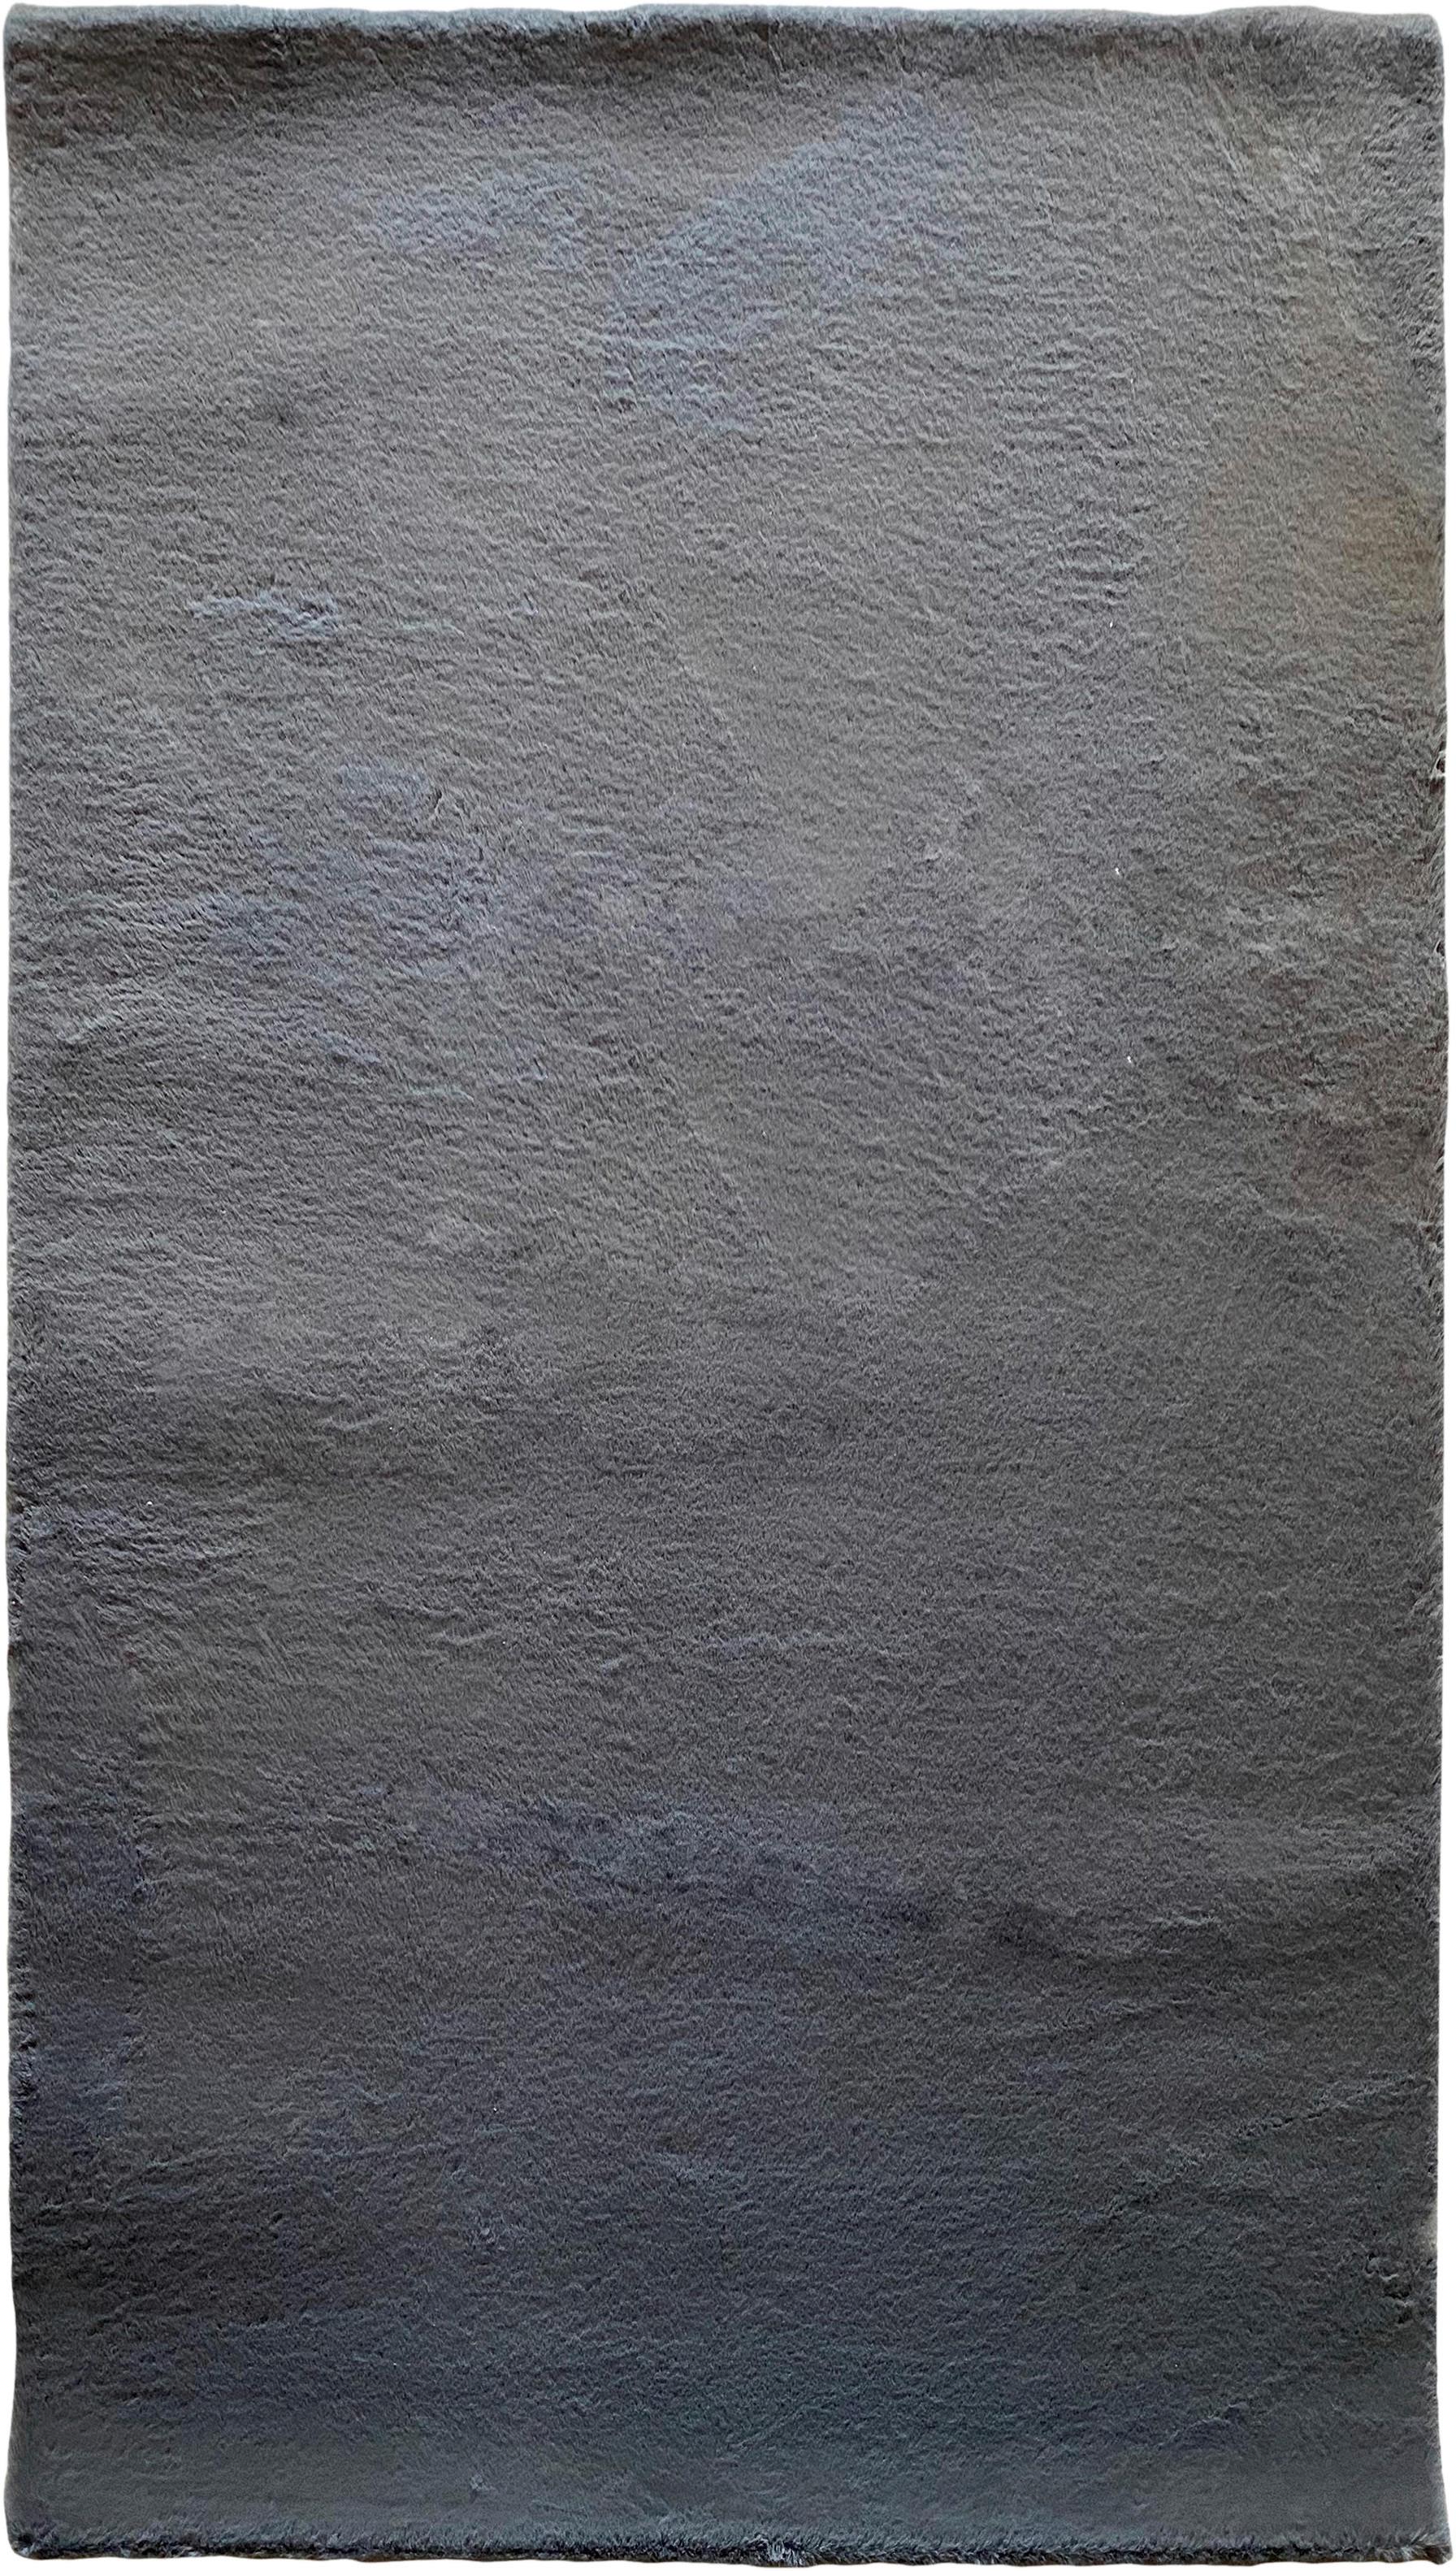 Fellteppich Magarete Stahlgrau 80x150 cm - Dunkelgrau, Textil (80/150cm) - Luca Bessoni